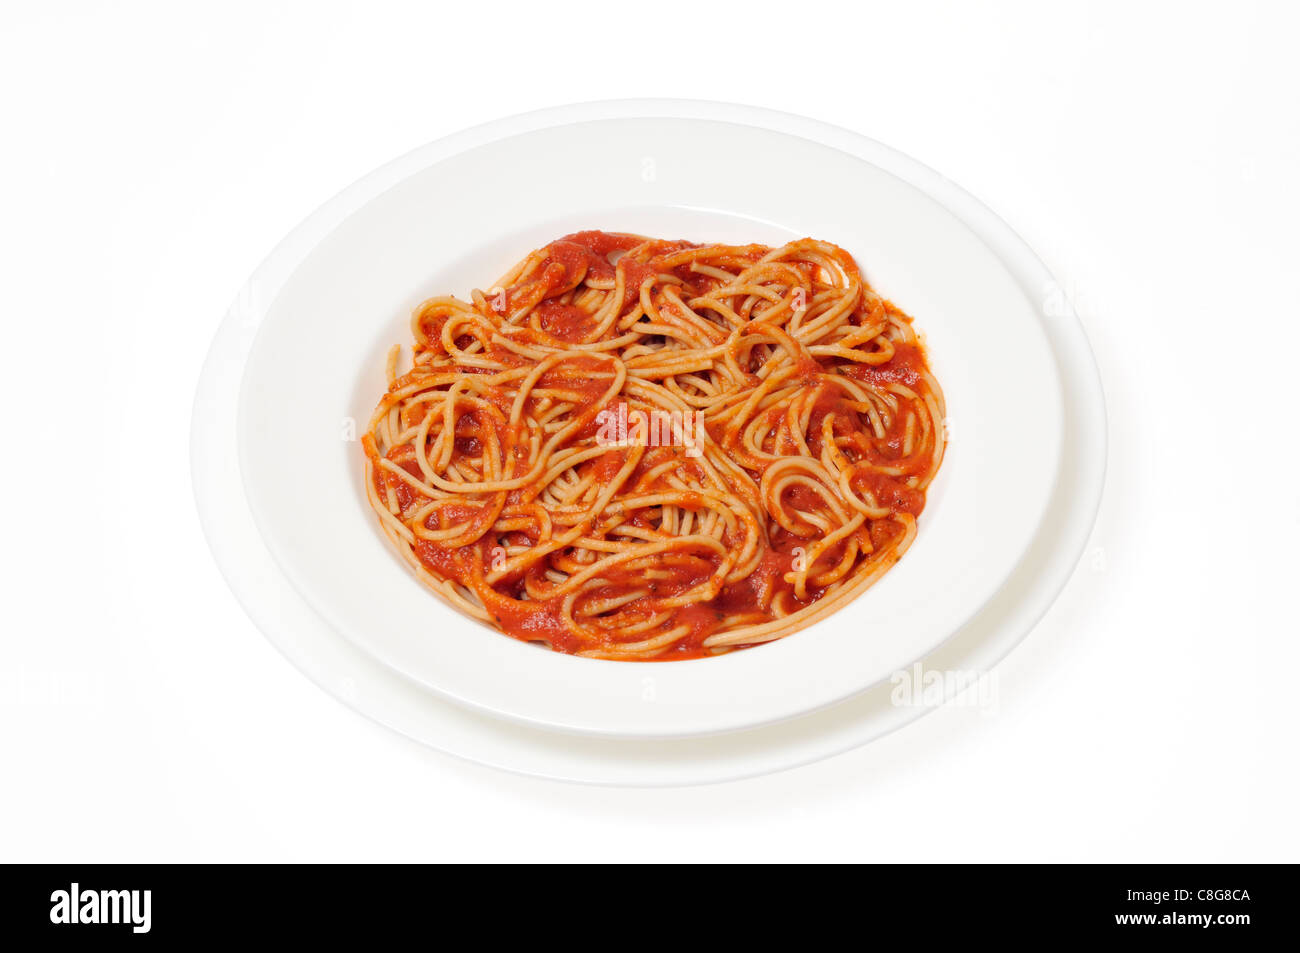 Cooked whole wheat spaghetti with tomato sauce in white bowl on white background cutout. Stock Photo